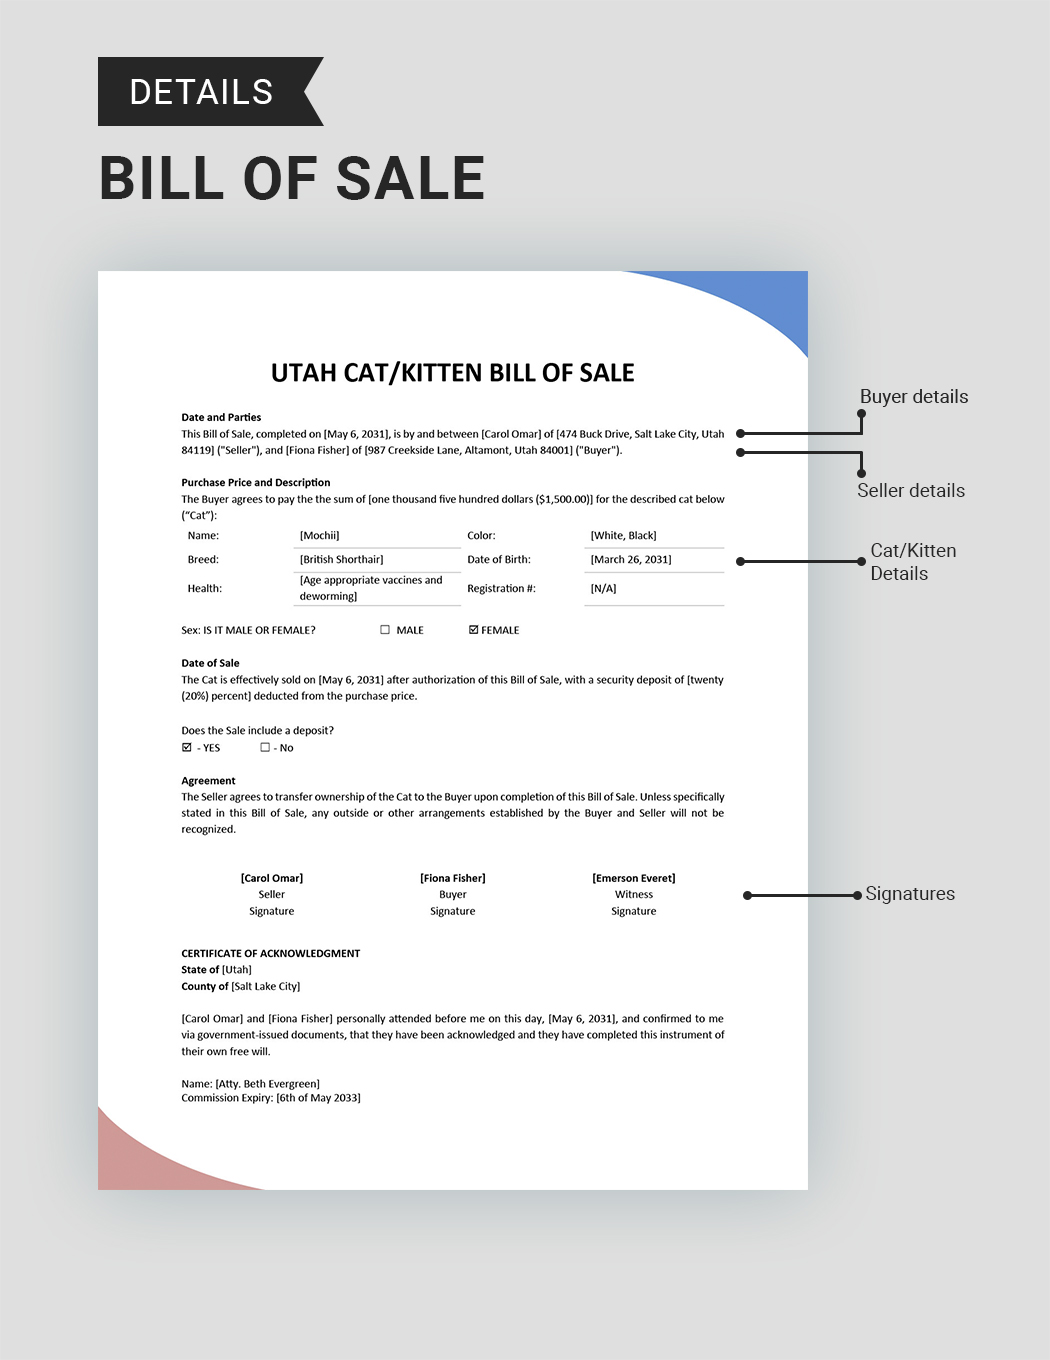 Utah Cat/Kitten Bill of Sale Template